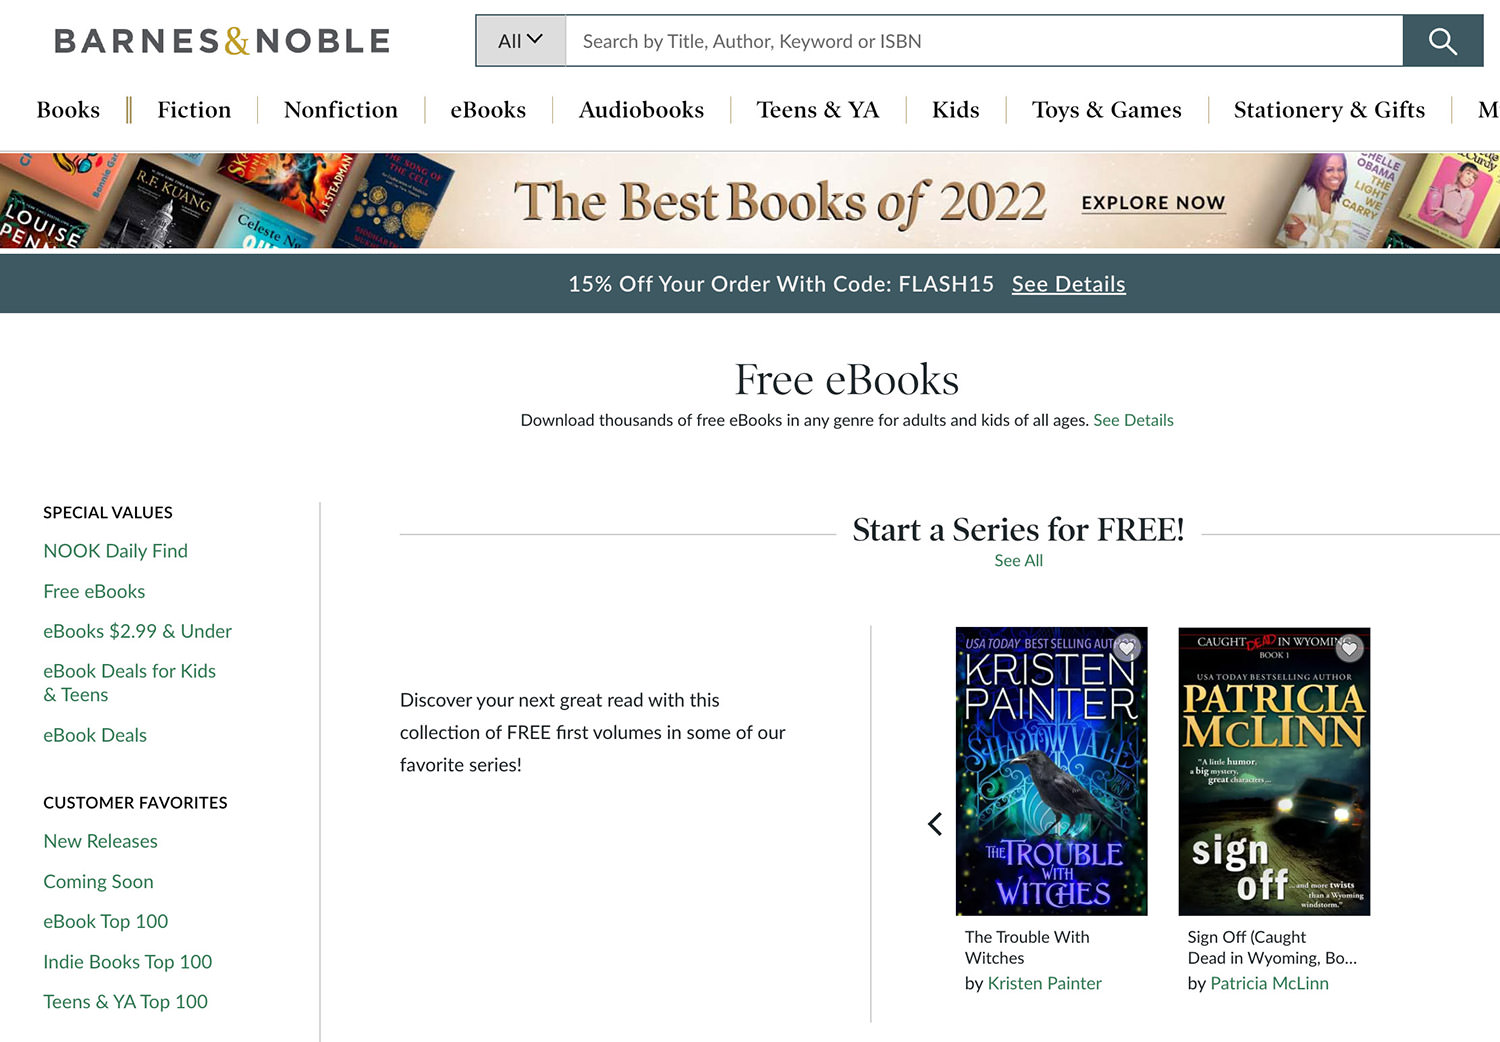 Image of Barnes & Noble website